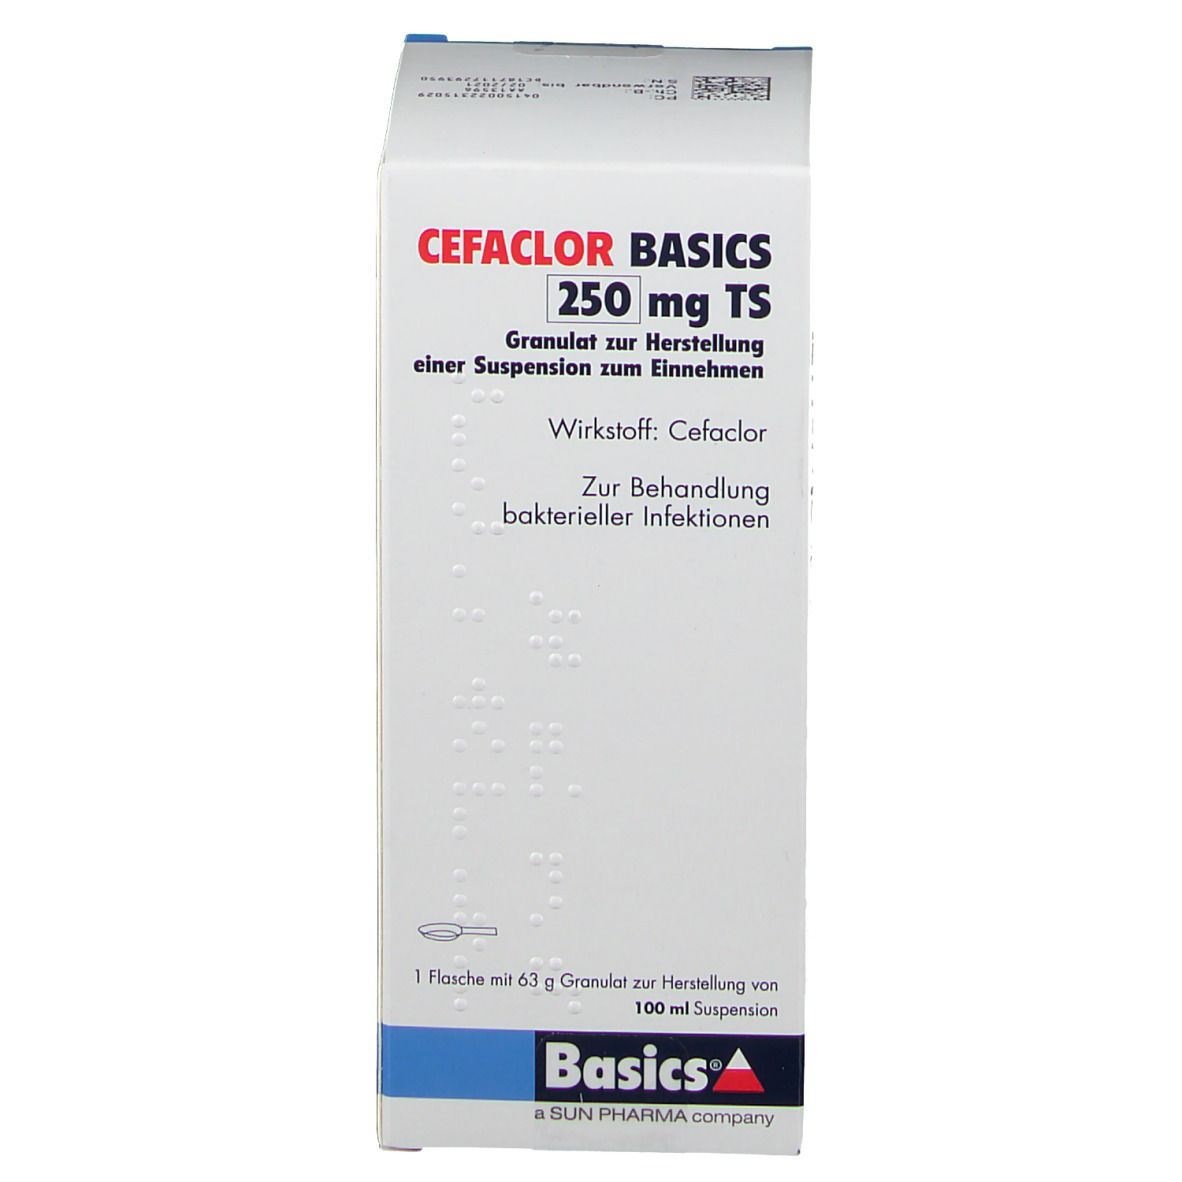 CEFACLOR BASICS 250 mg TS